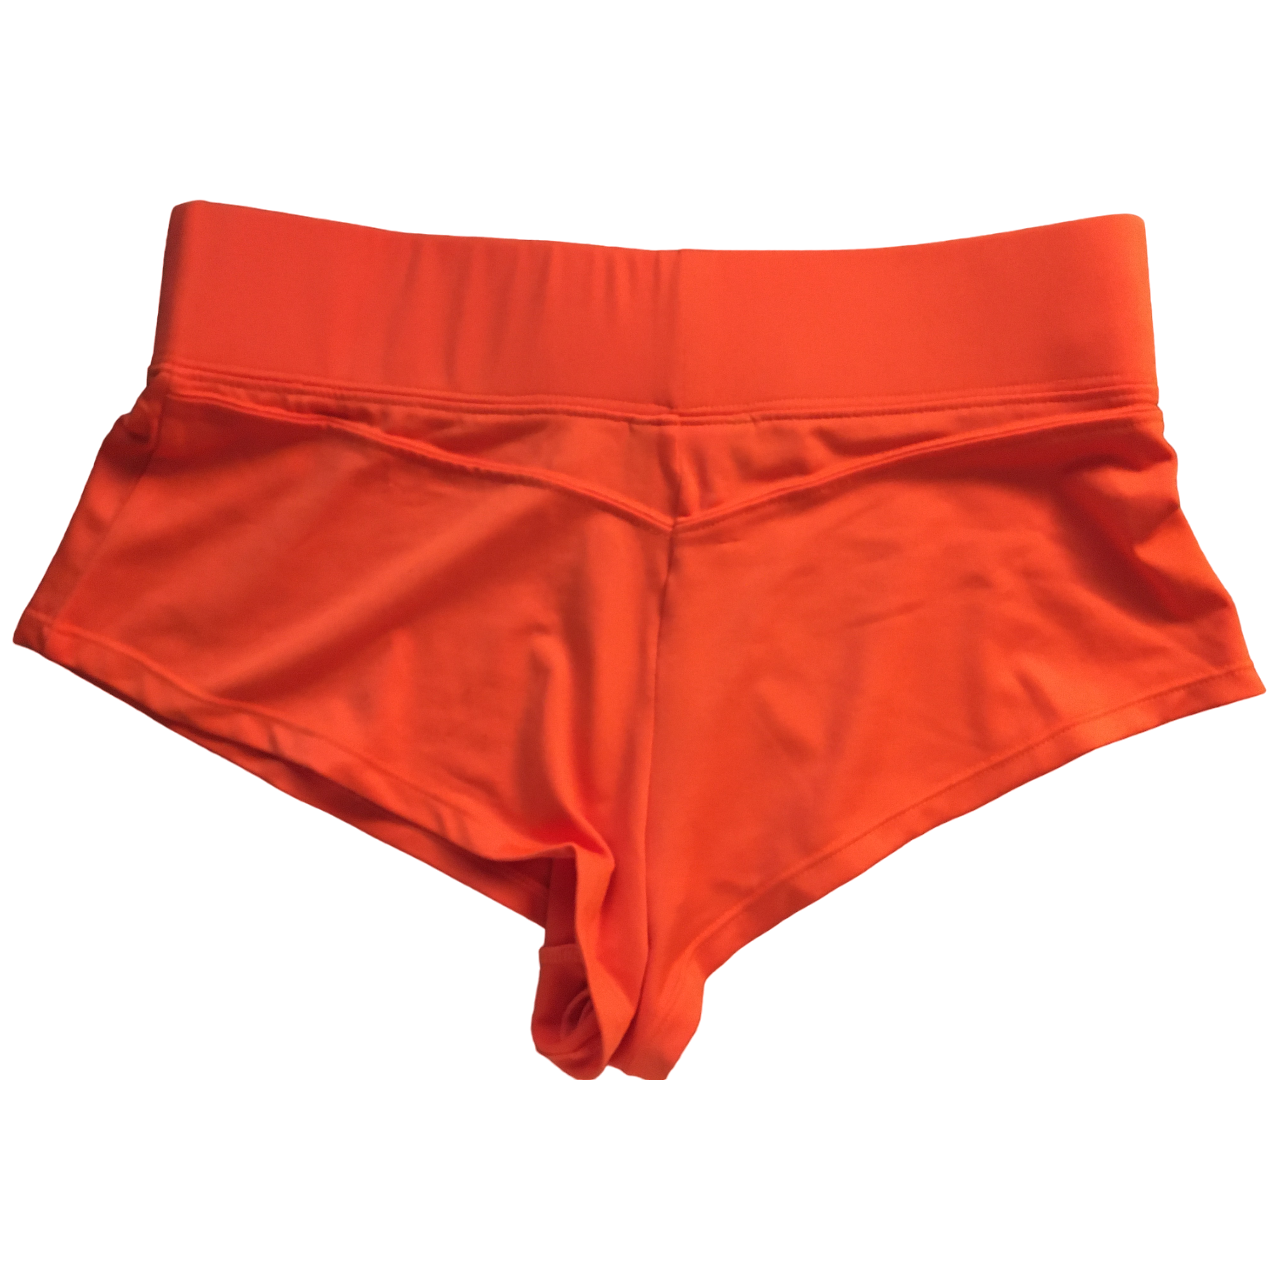 Hooters Women's Uniform Costume Cheeky Orange Shorts